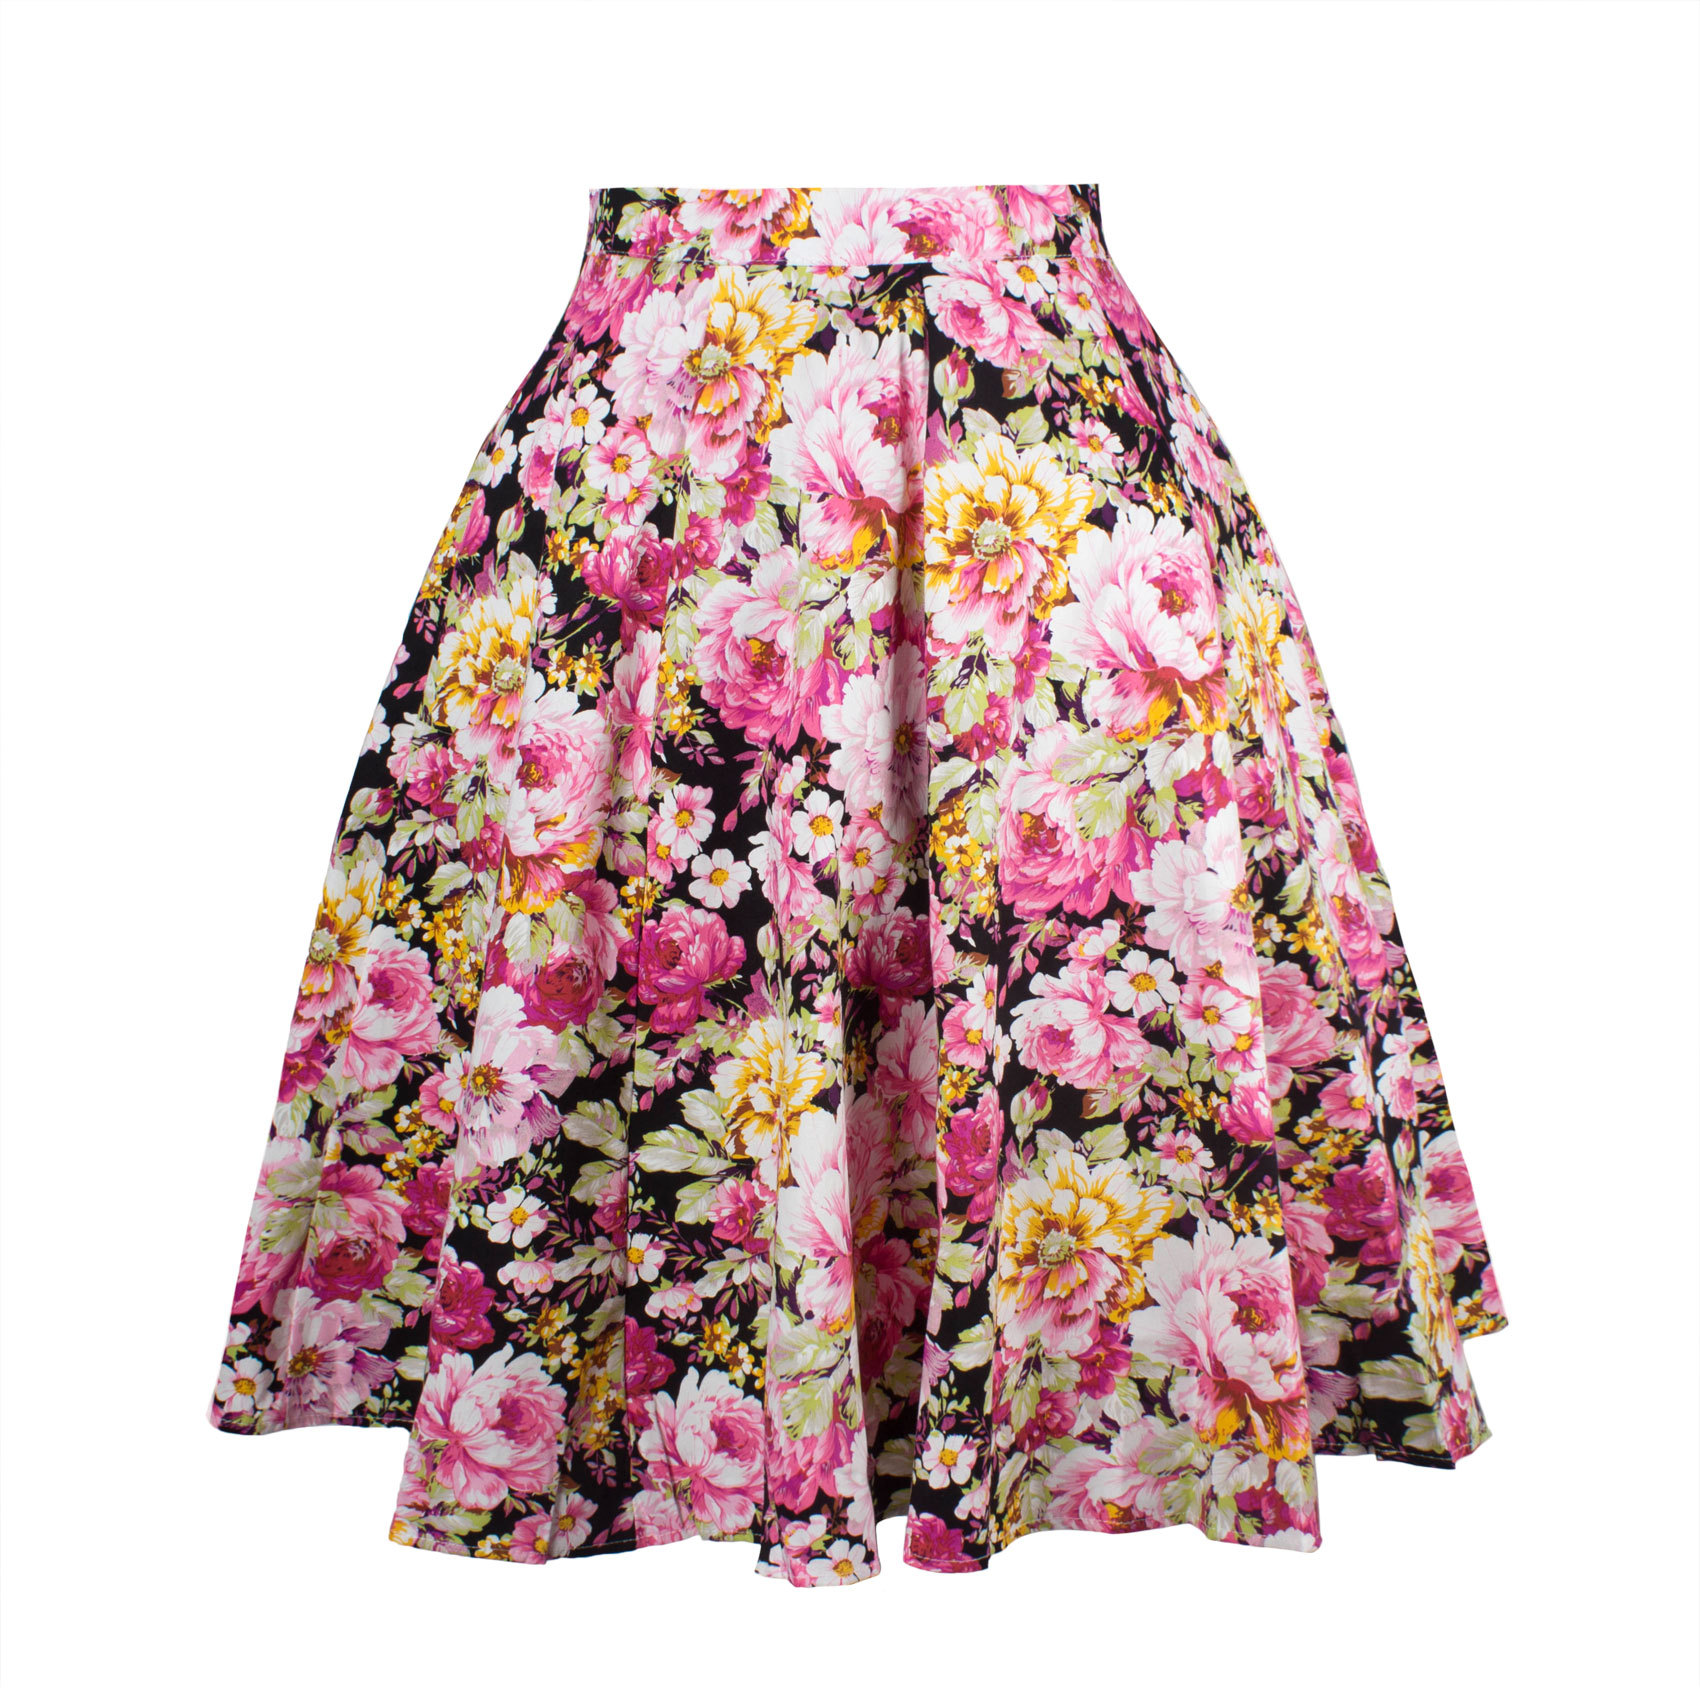 Women Floral Print/Polka Dot Skirt High Waist Vintage 50s 60s A Line ...